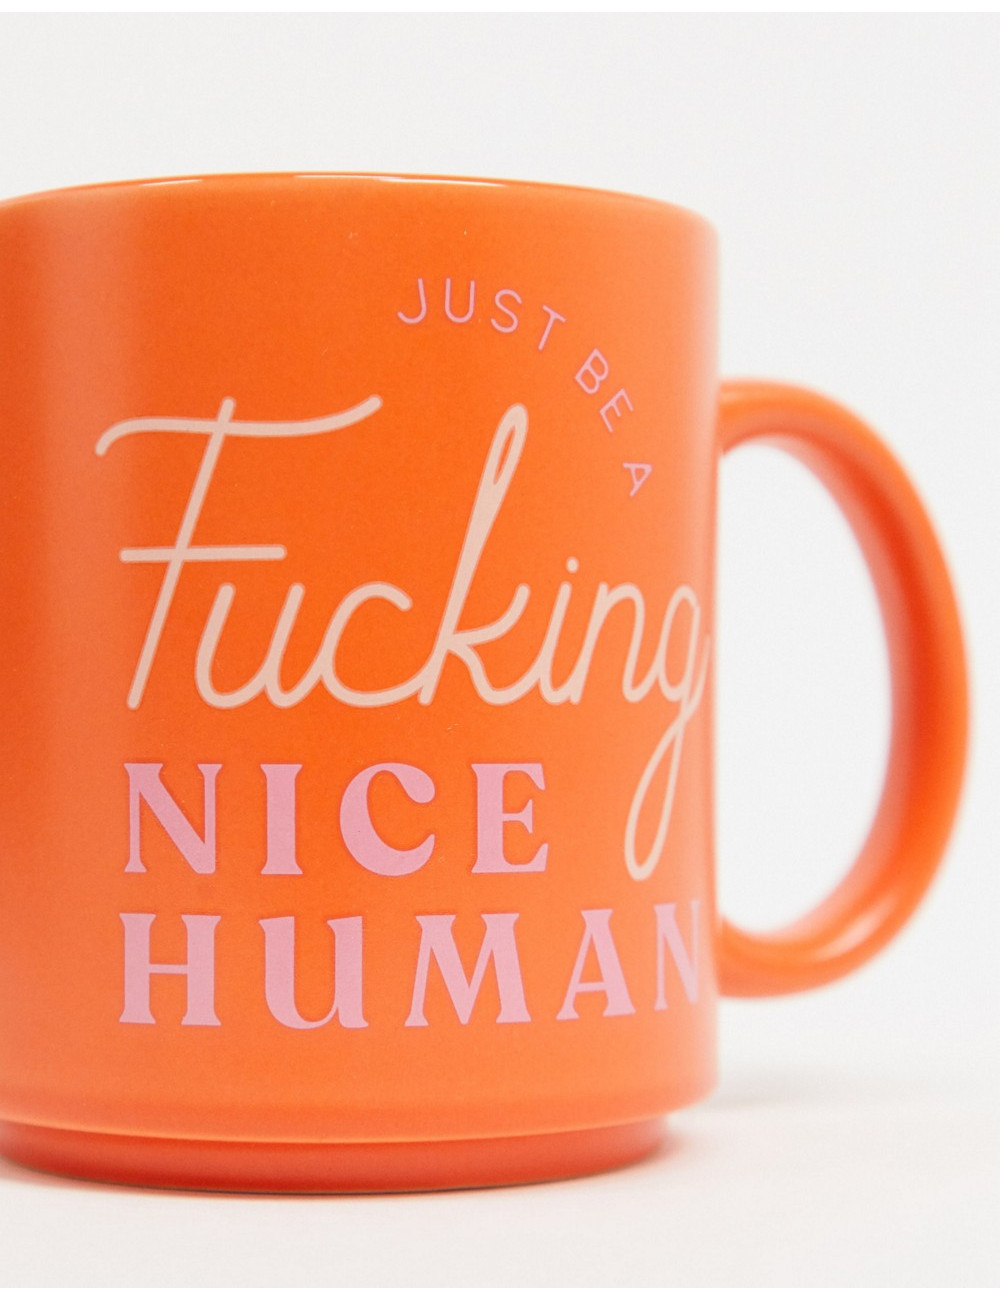 Typo mug with be a nice...